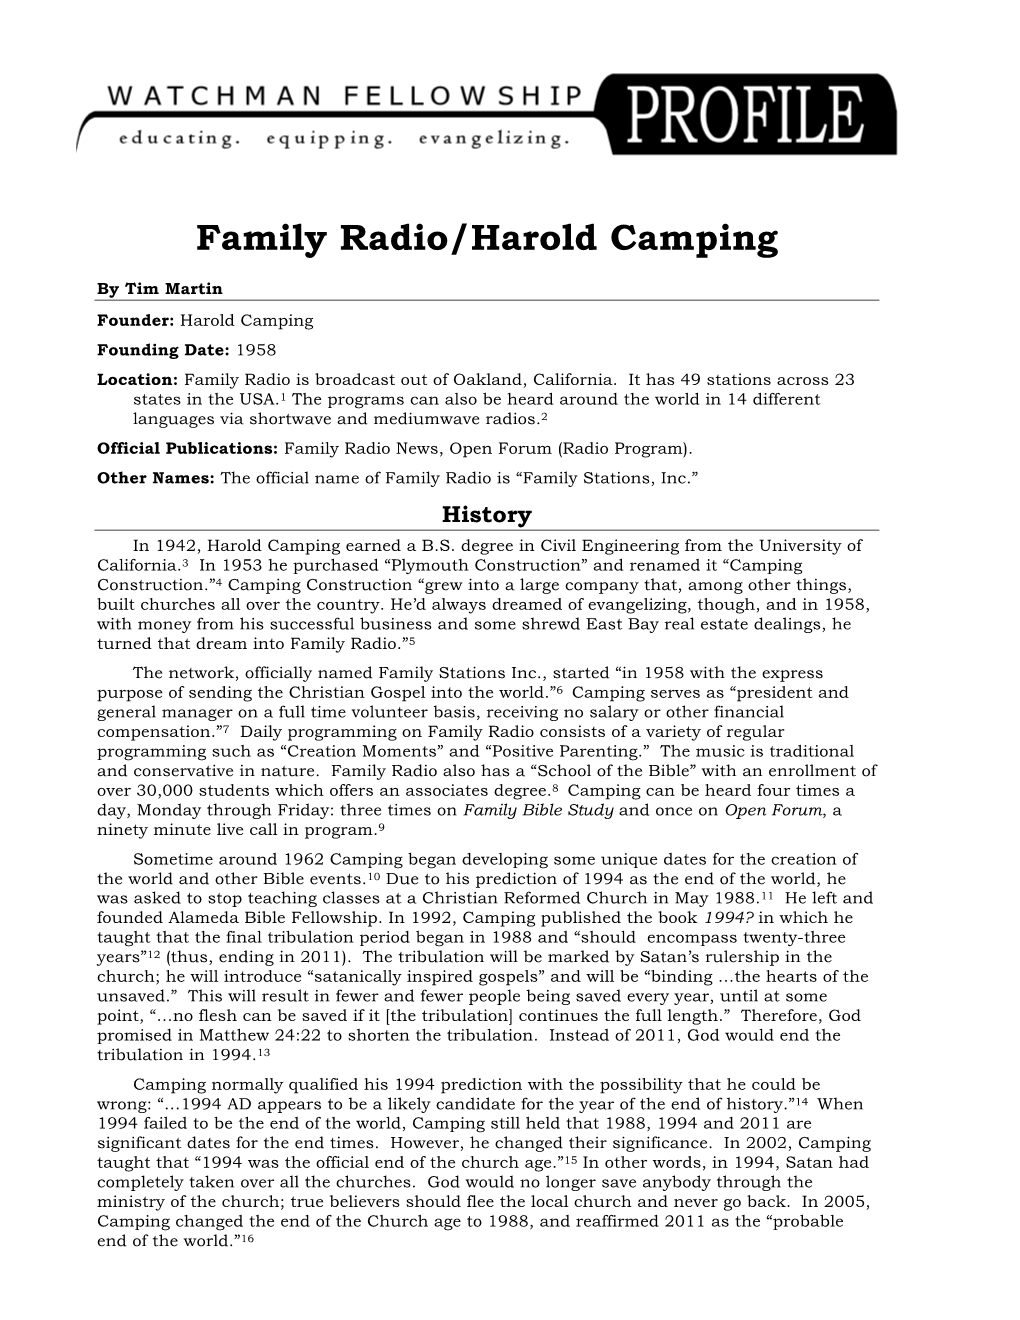 Family Radio / Harold Camping Profile